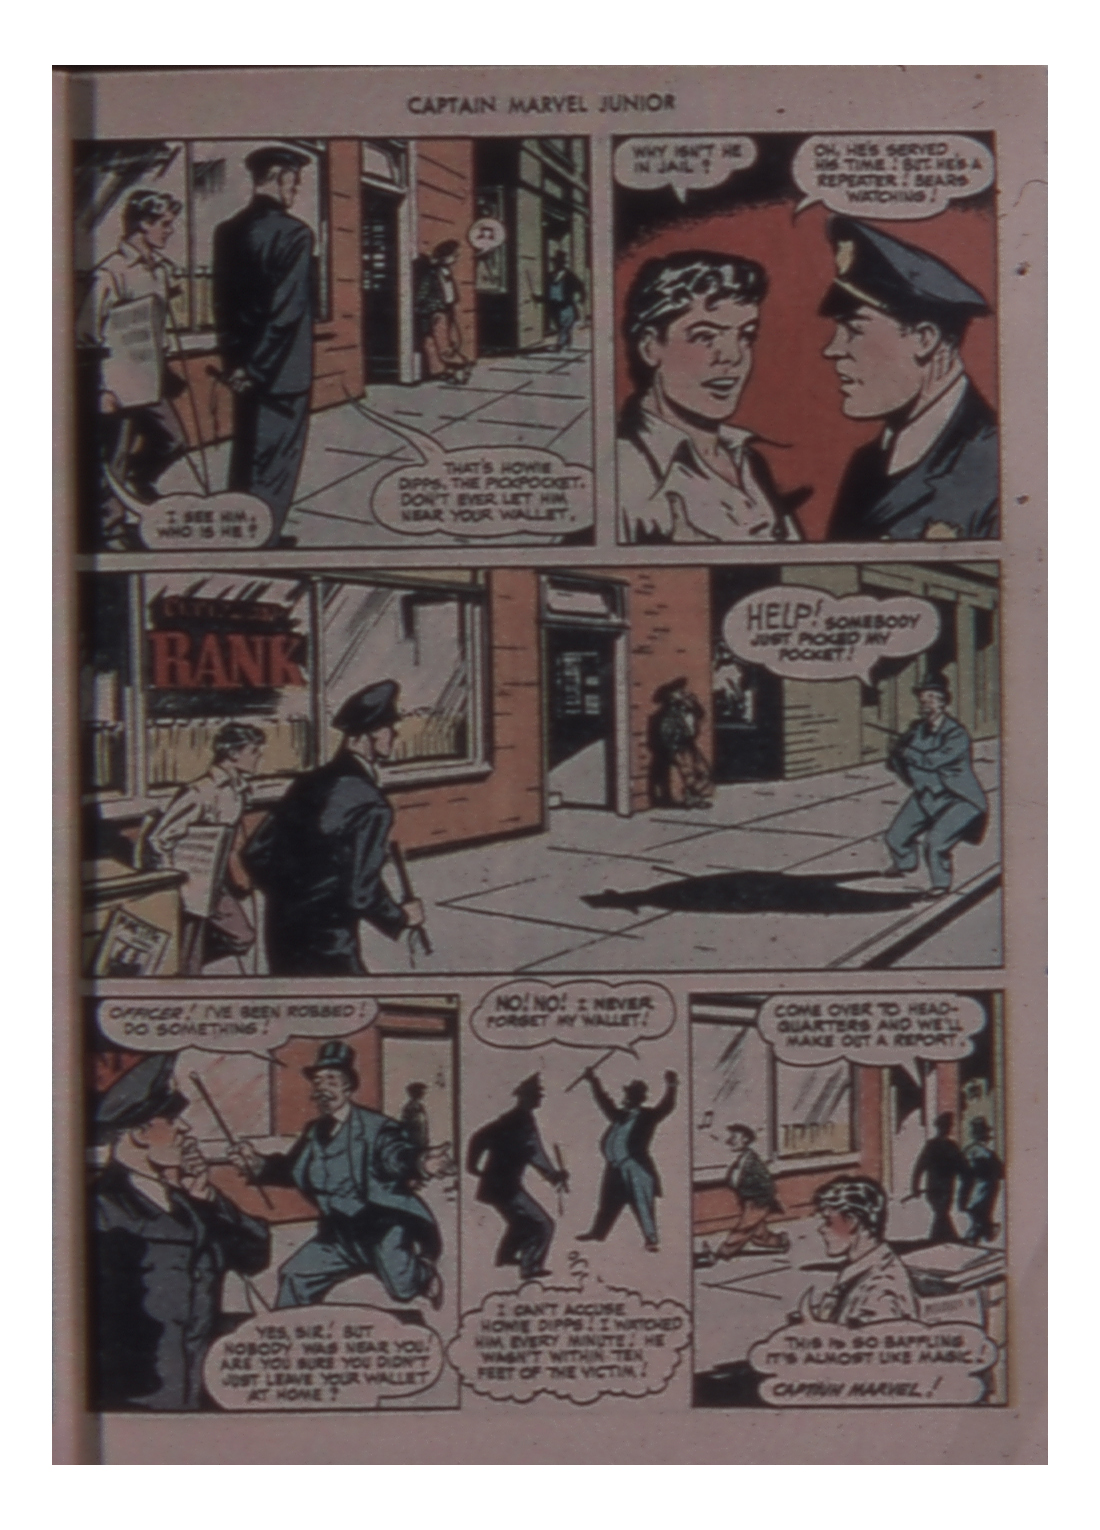 Read online Captain Marvel, Jr. comic -  Issue #81 - 41